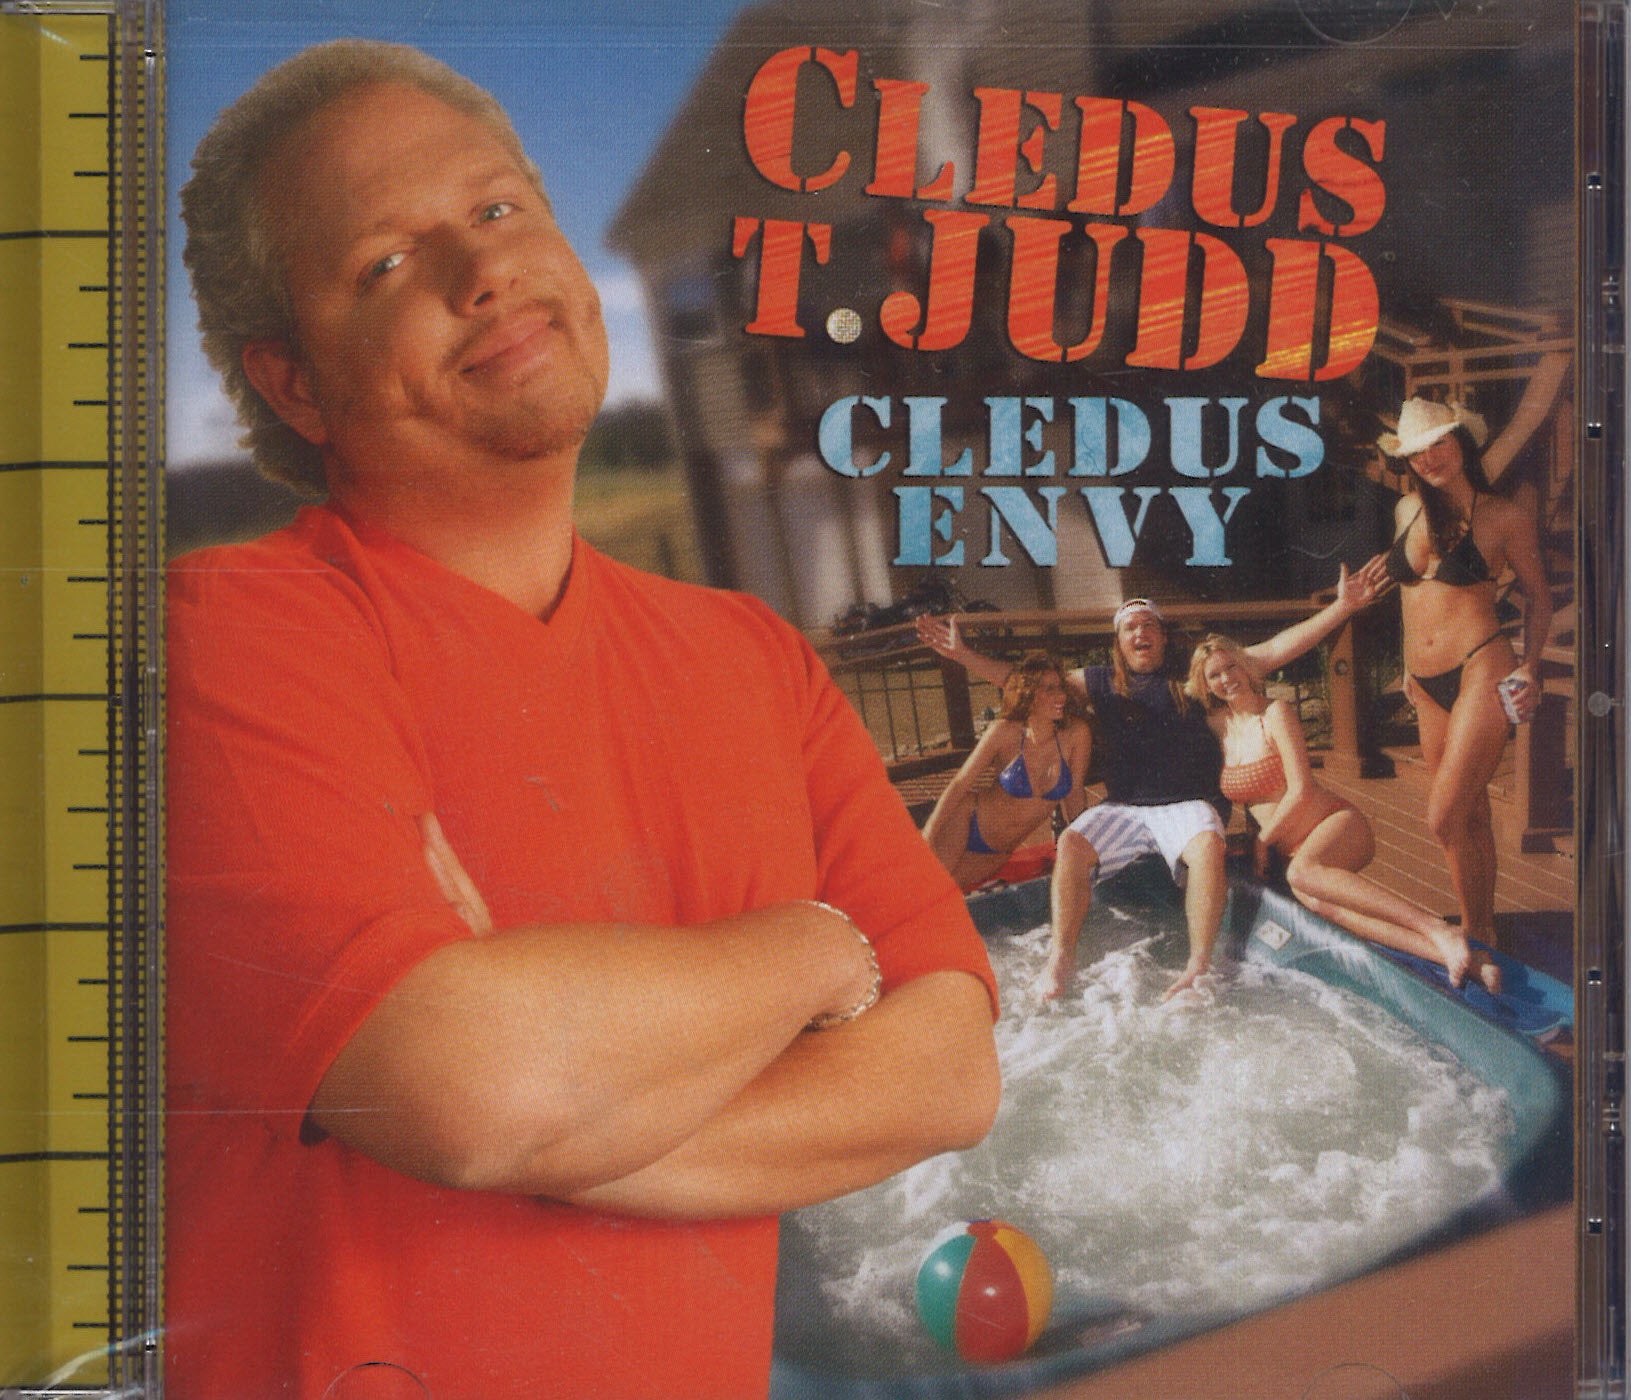 Cledus T. Judd Cledus Envy